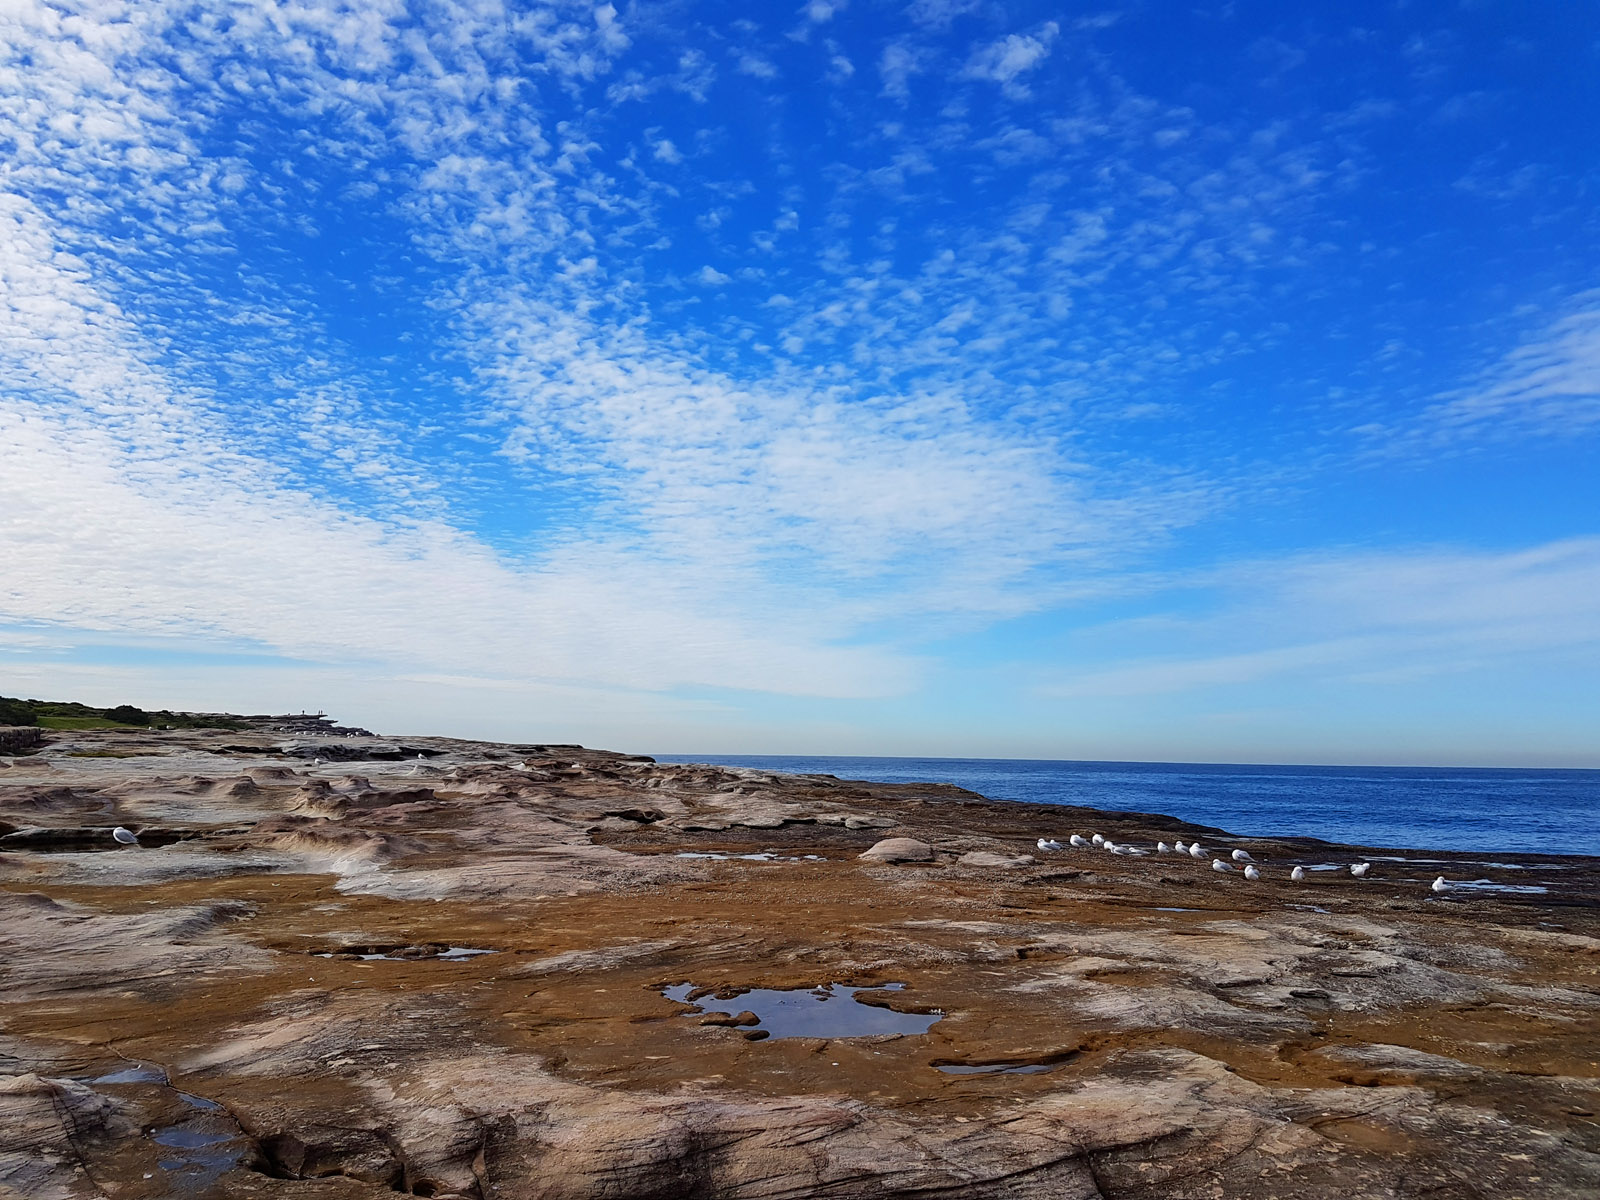 SGMT Australia Sydney_Bondi to Coogee Coastal Walk_14 Clovelly Beach Cliff Clouds and Birds